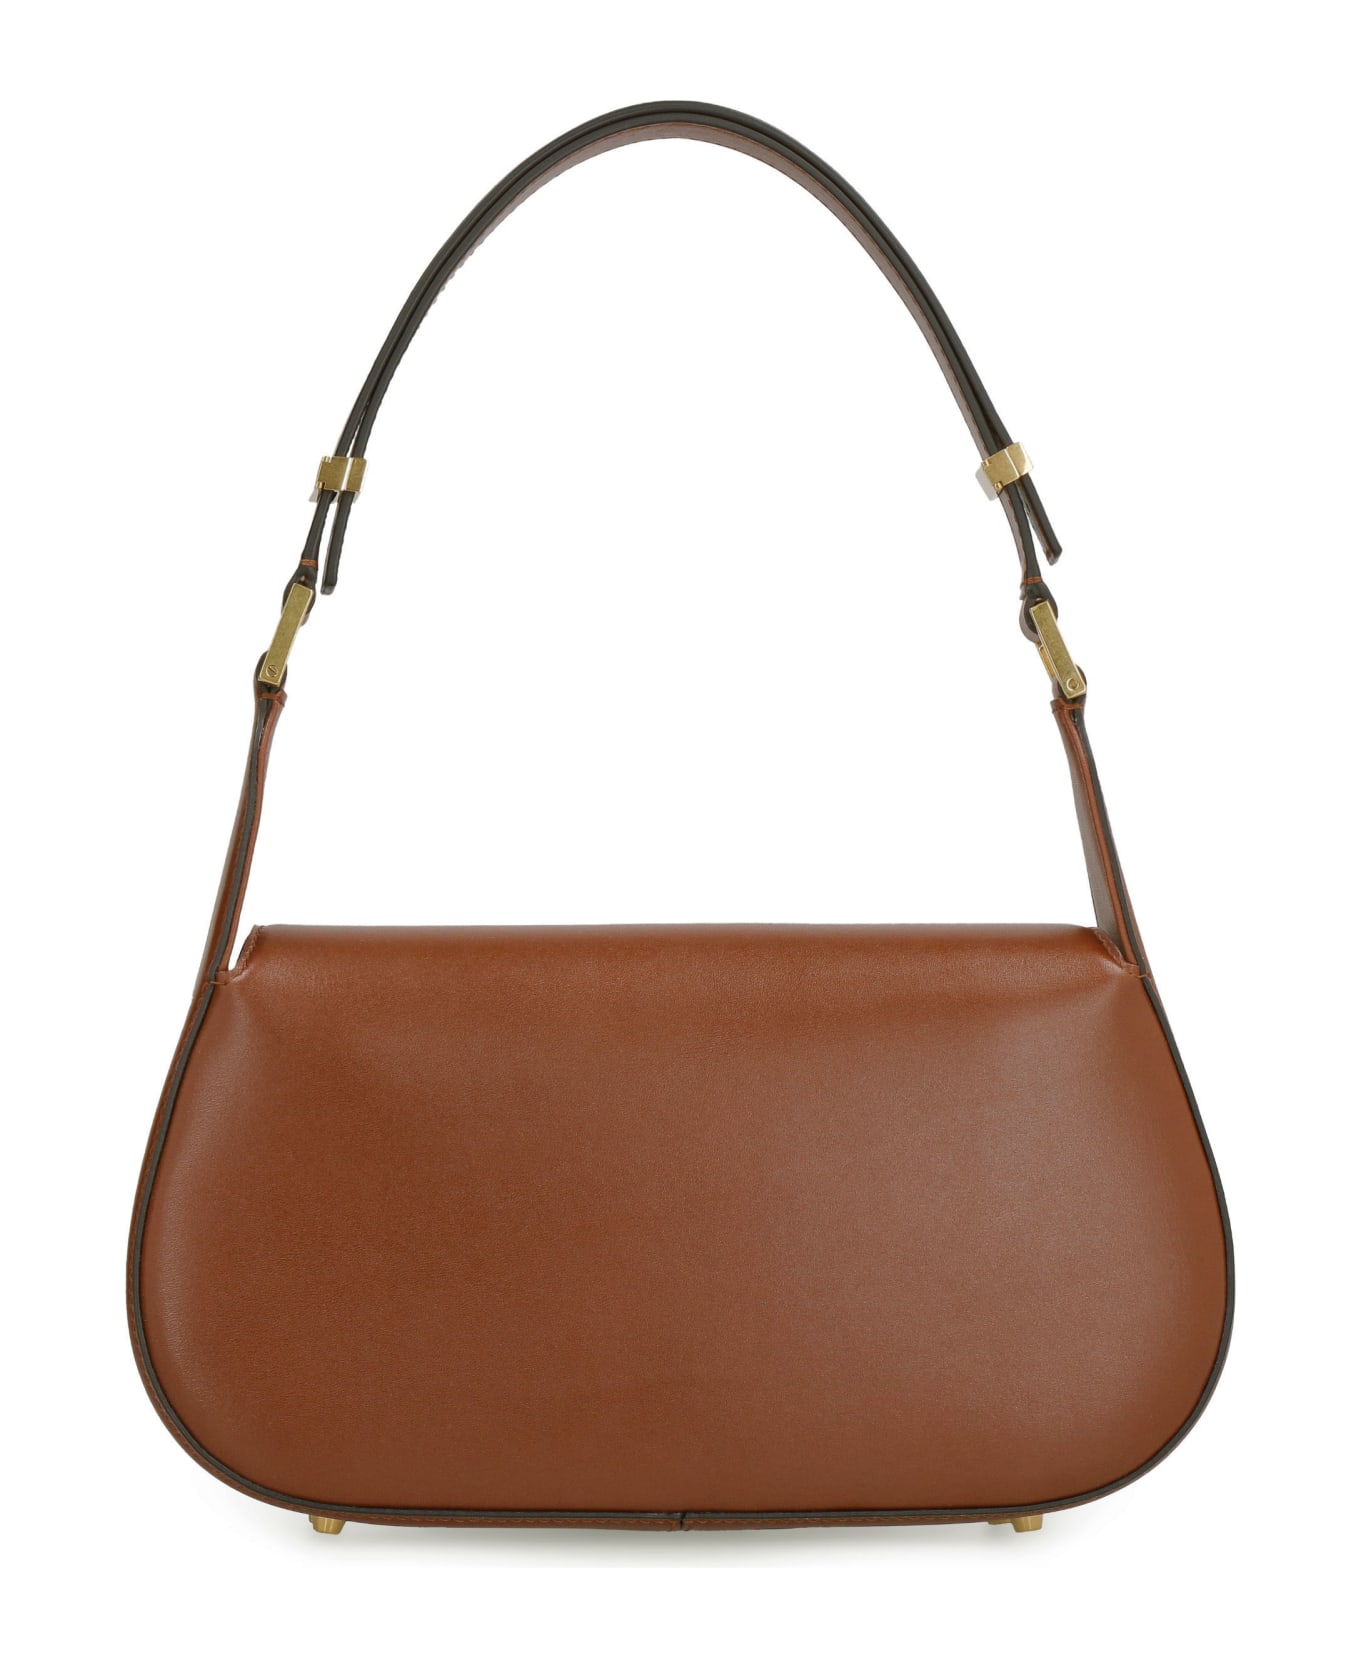 Valentino Garavani - Vlogo Chain Leather Shoulder Bag - brown